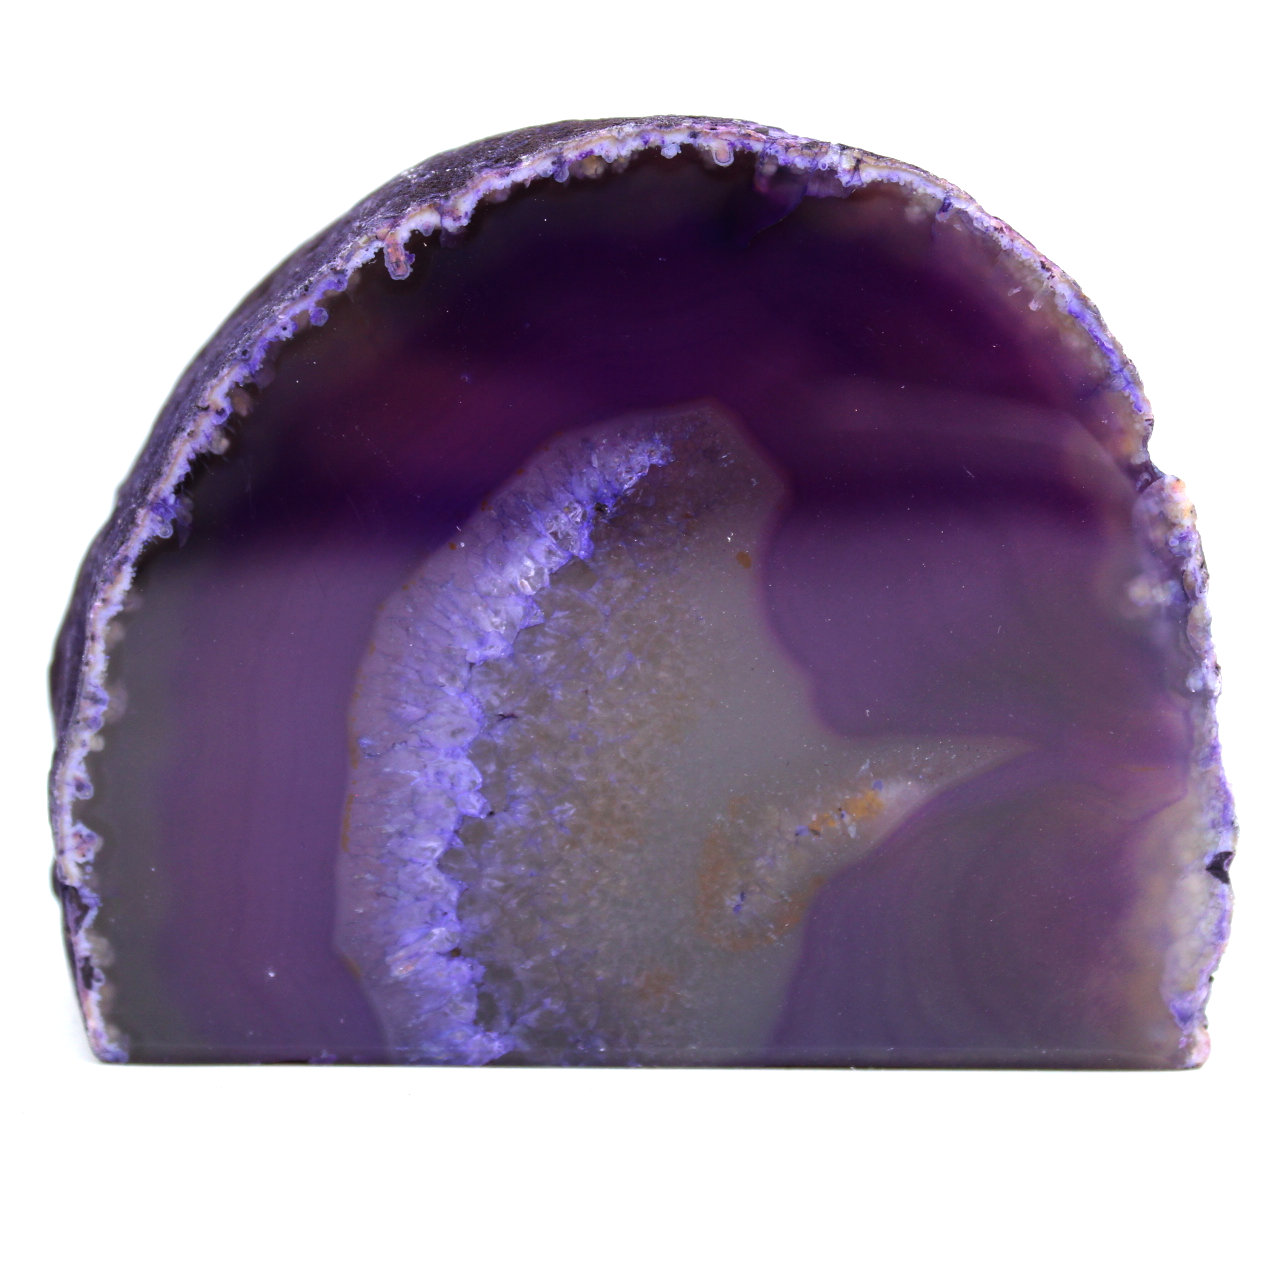 Mineral purple agate decoration